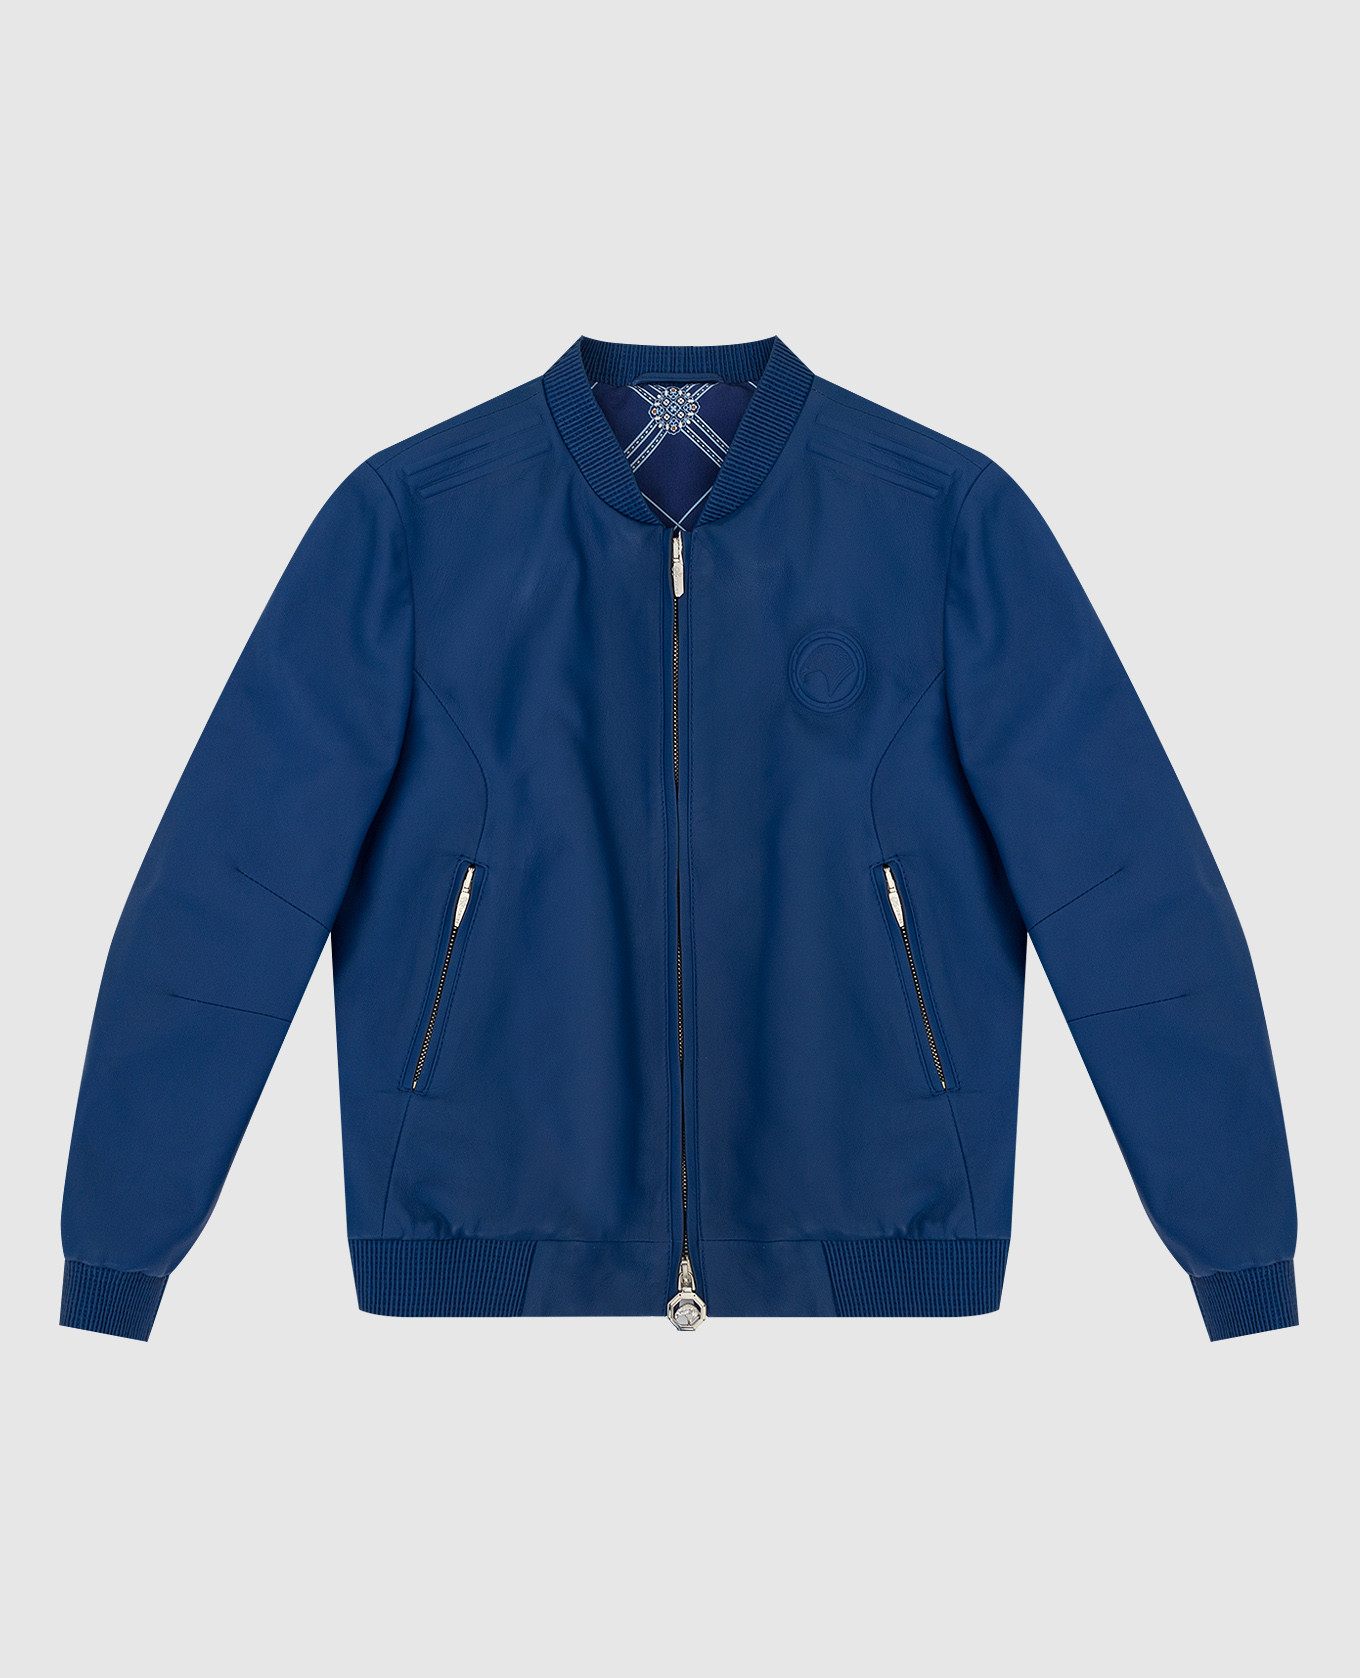 Children's blue leather bomber jacket